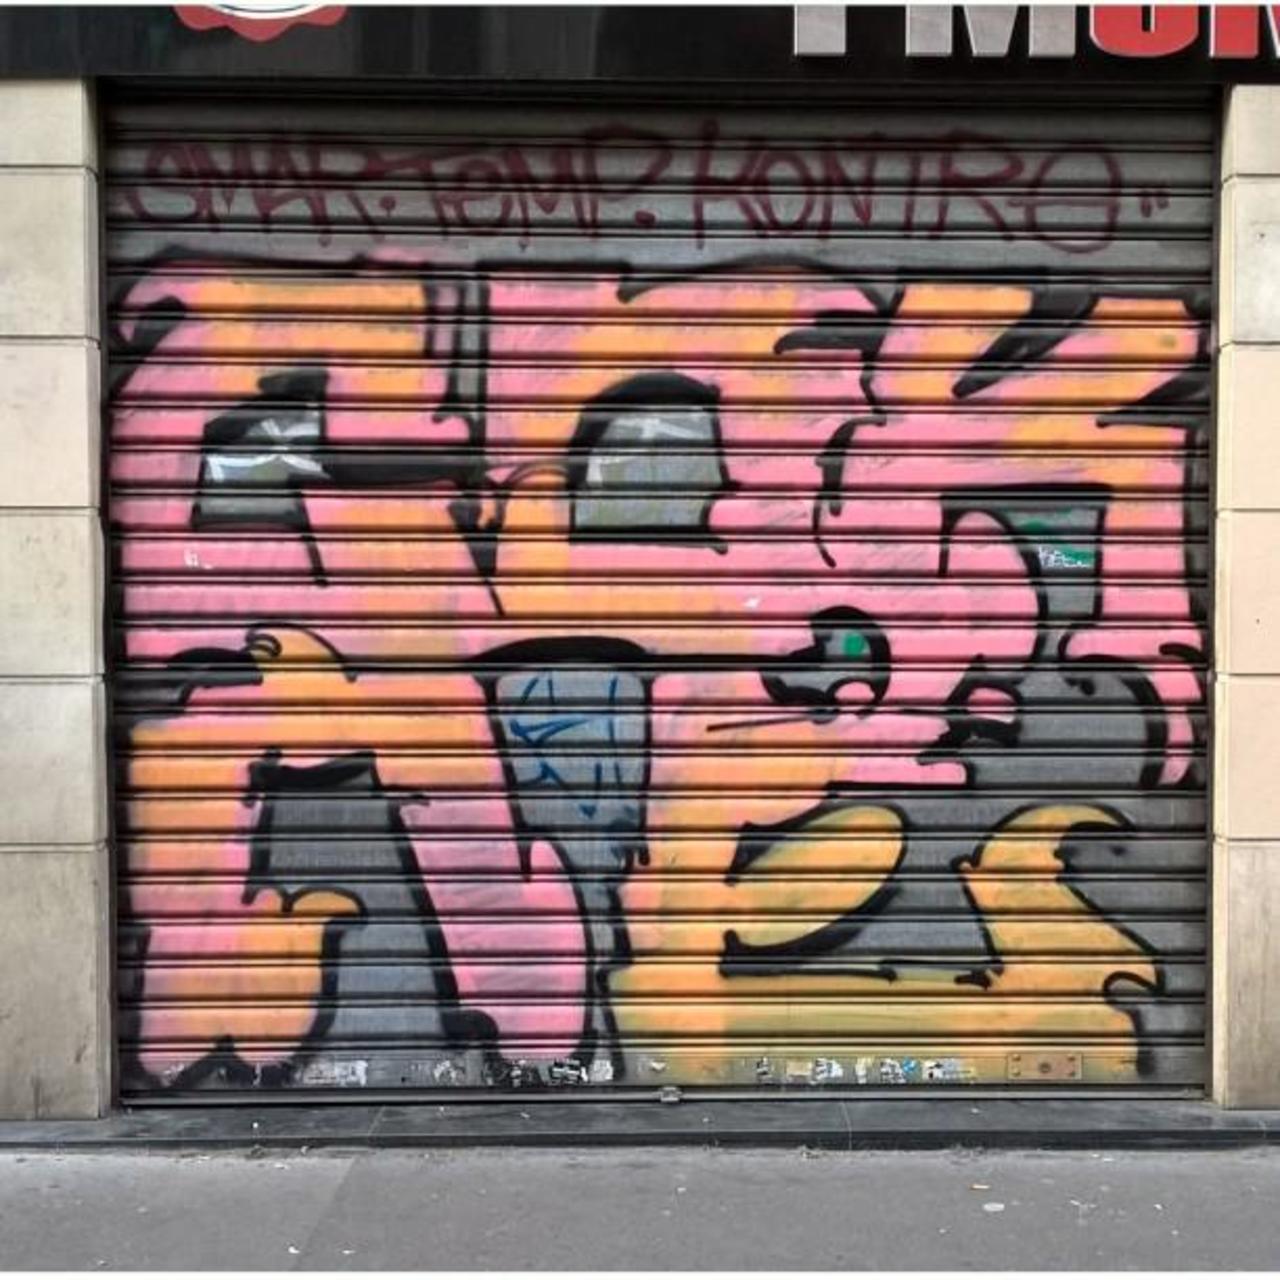 circumjacent_fr: #Paris #graffiti photo by maxdimontemarciano http://ift.tt/1jffYVf #StreetArt http://t.co/wR7mrJqK8s